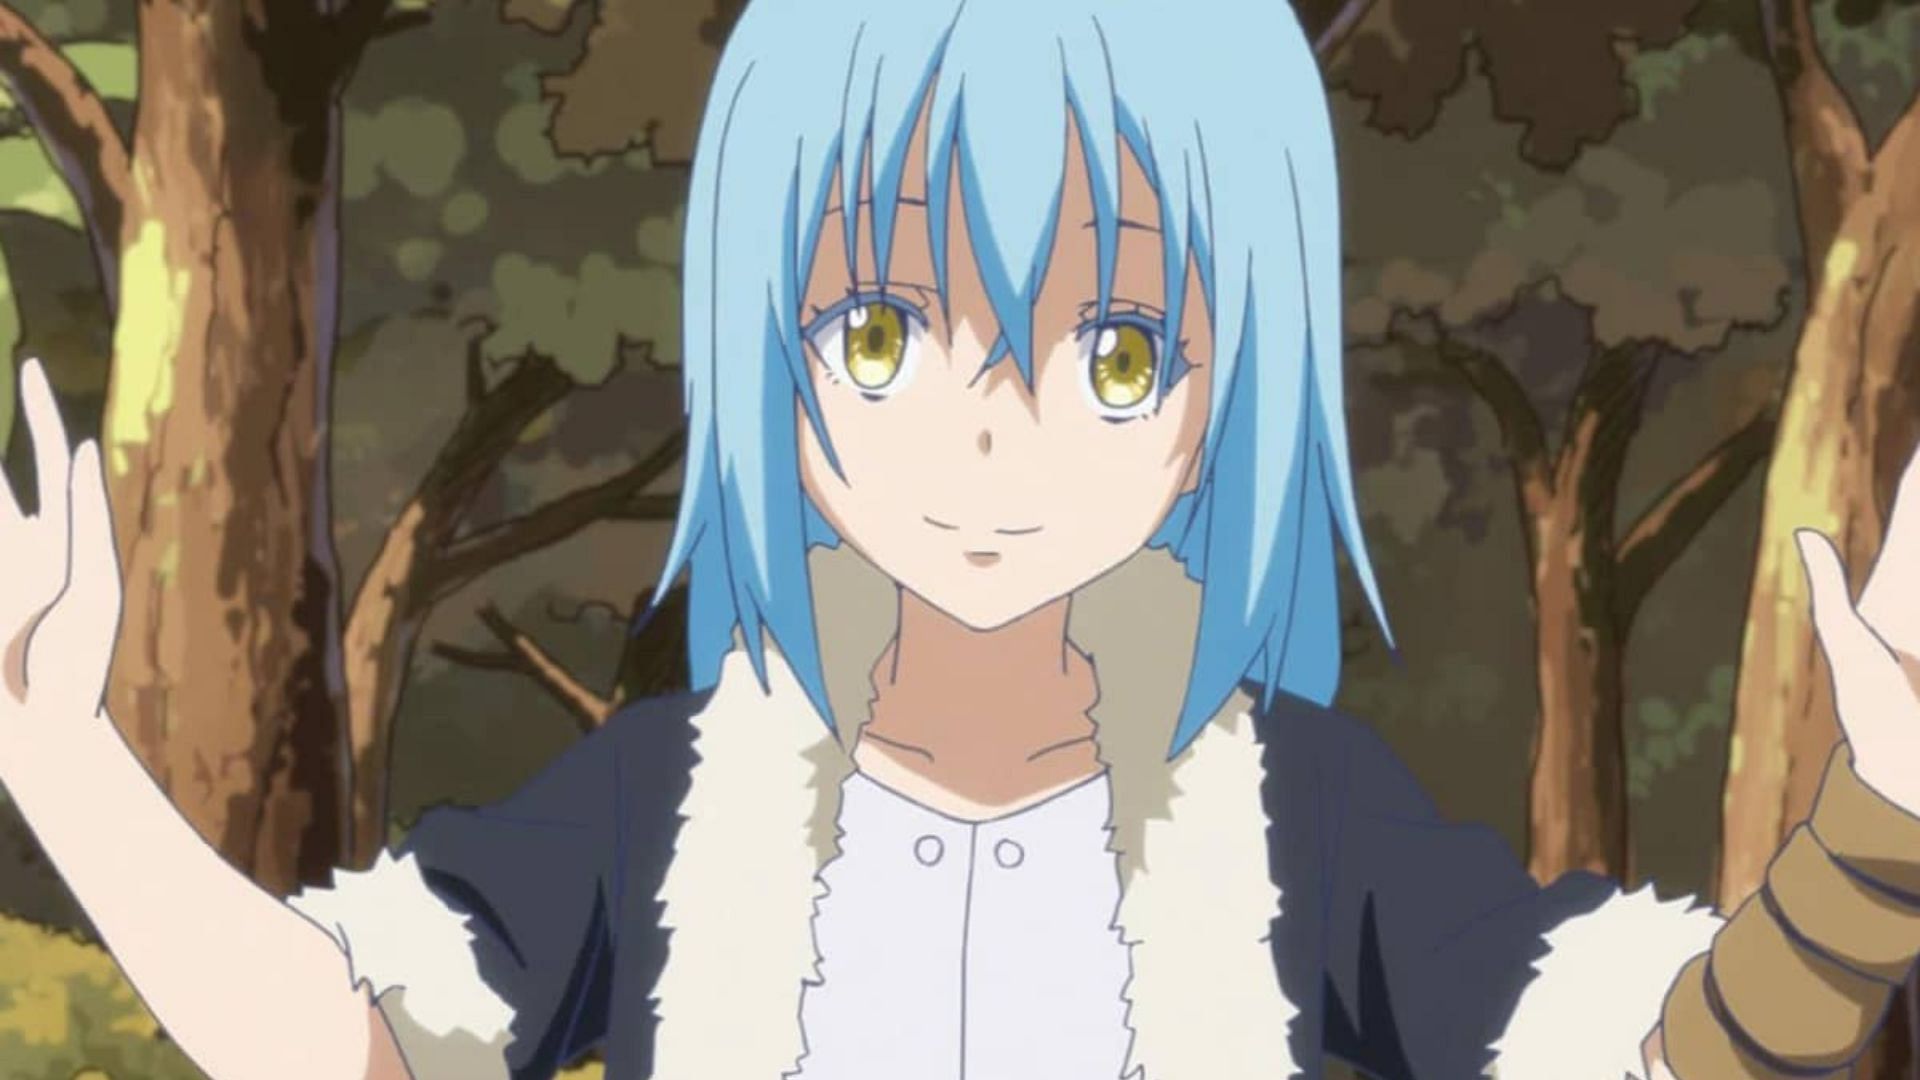 Rimuru as seen in the anime (Image via 8bit)